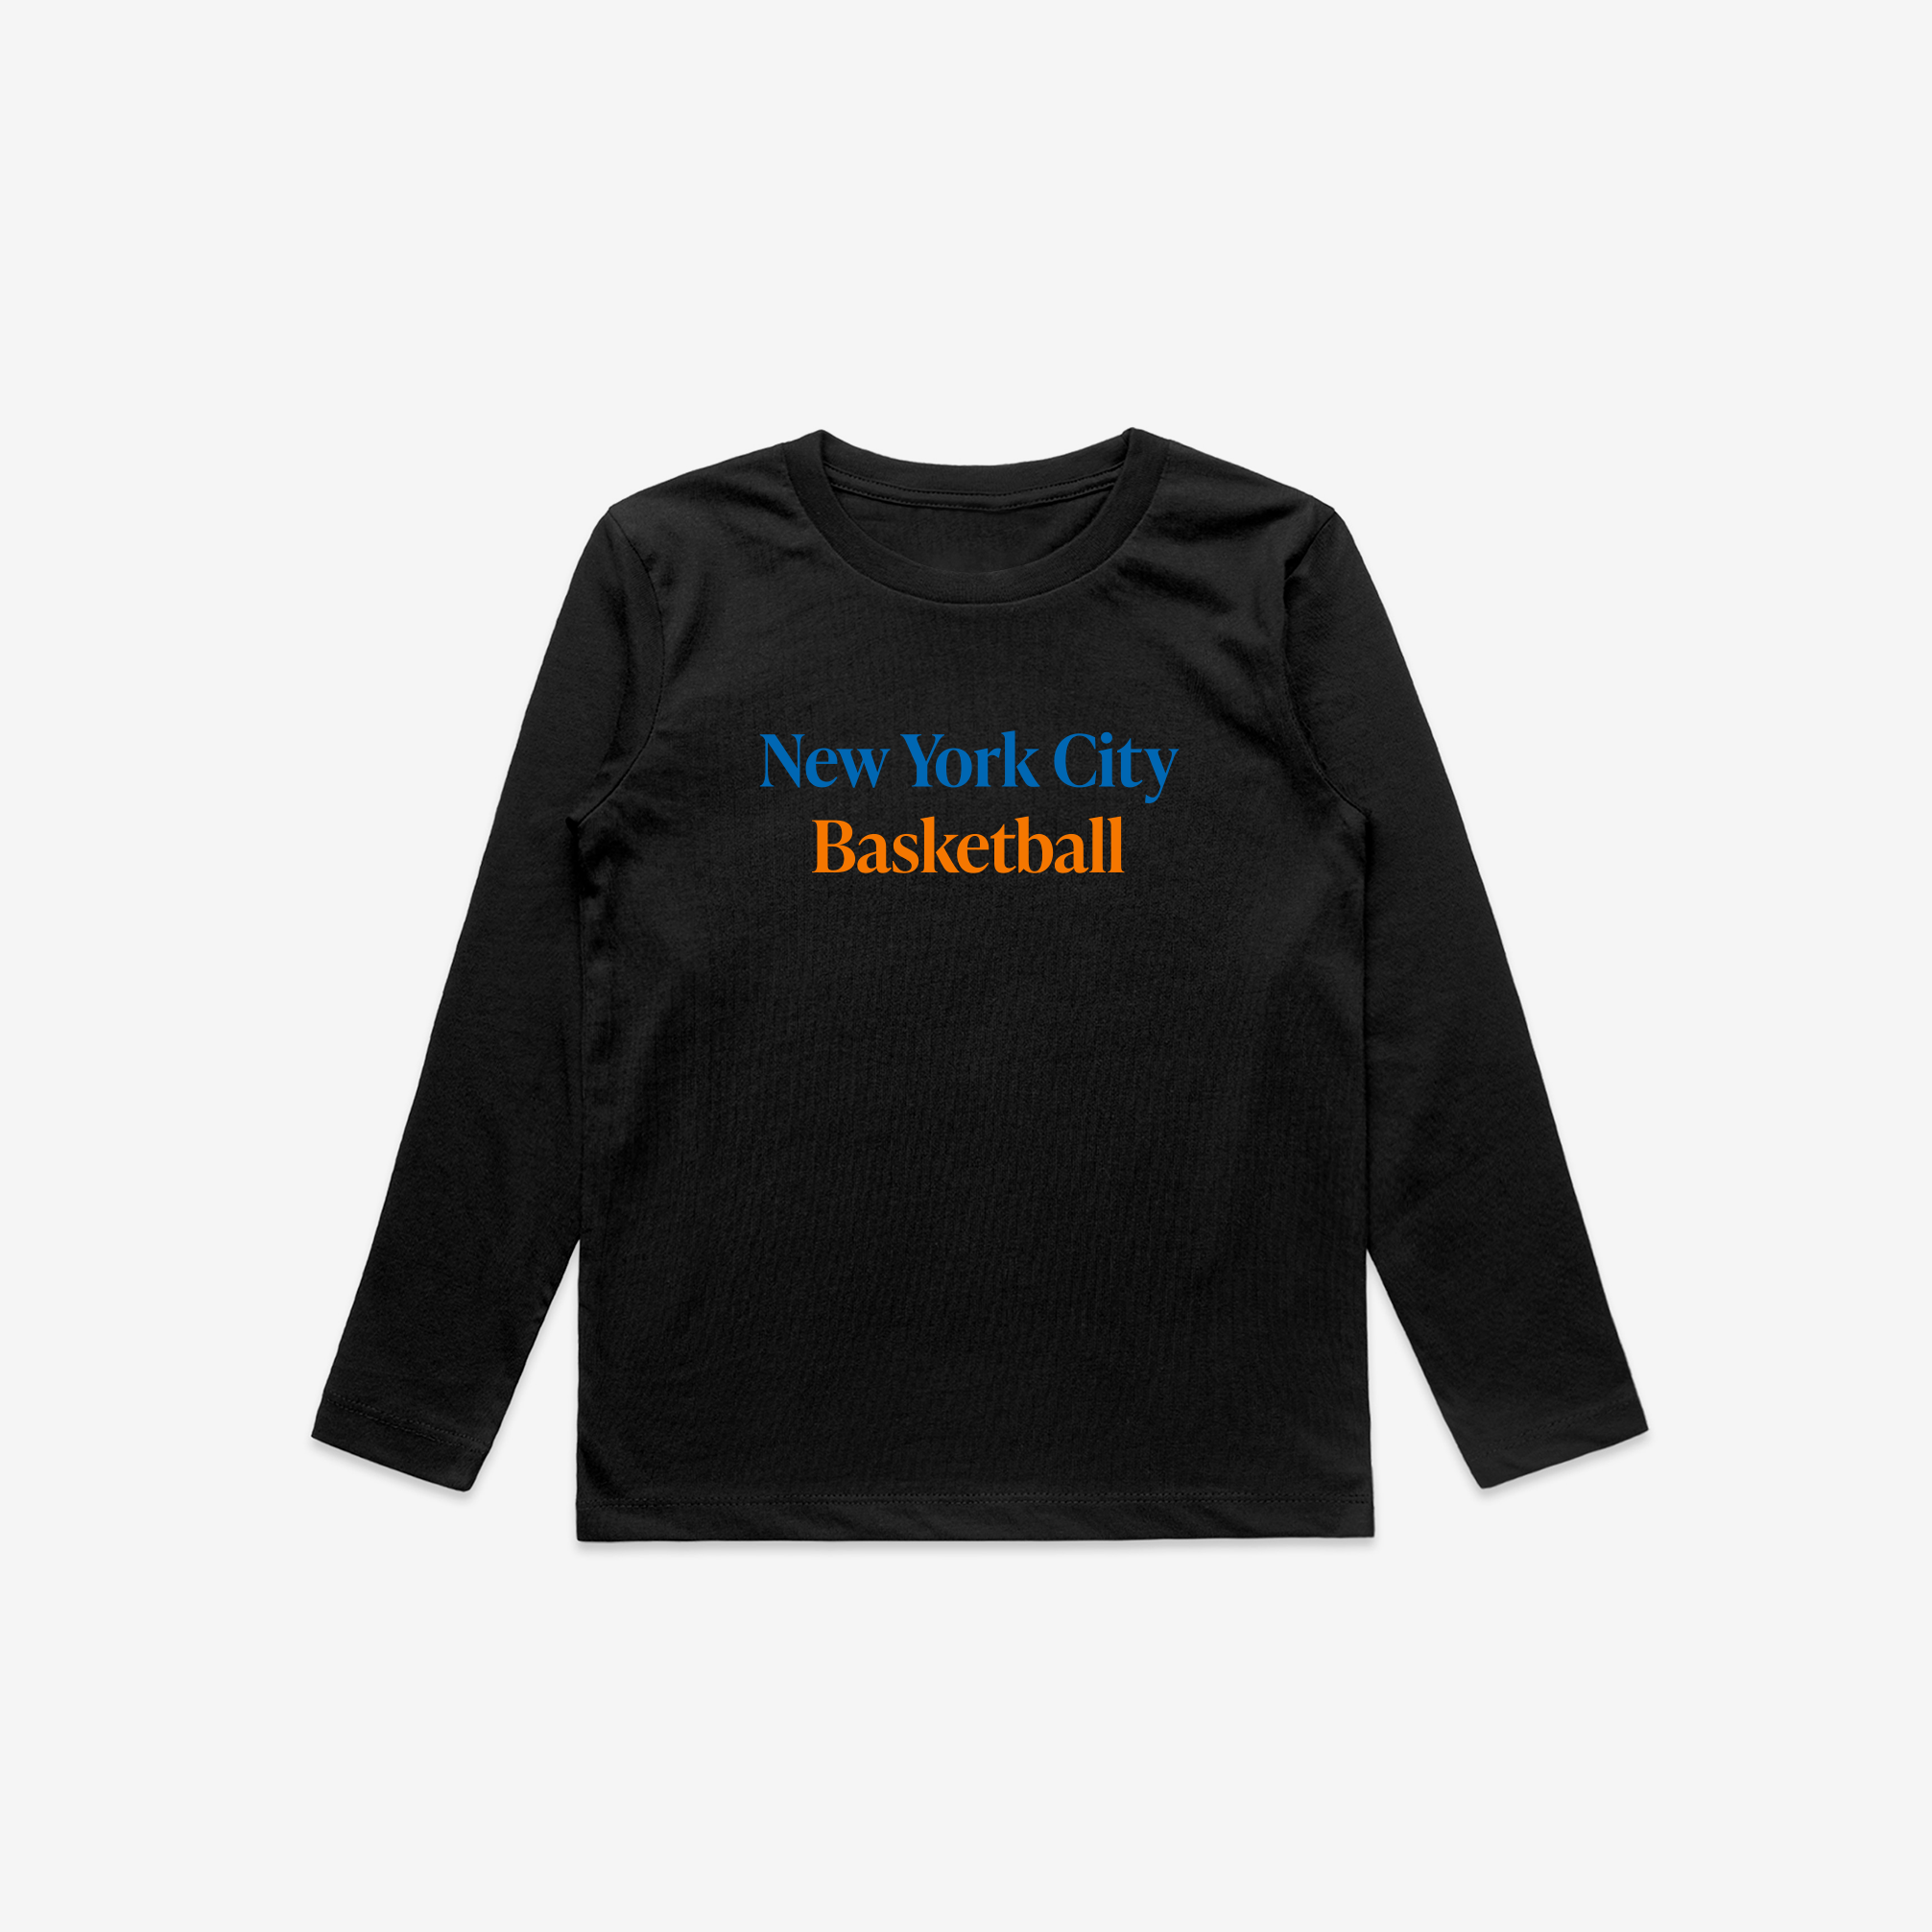 Kids New York City Basketball Tee